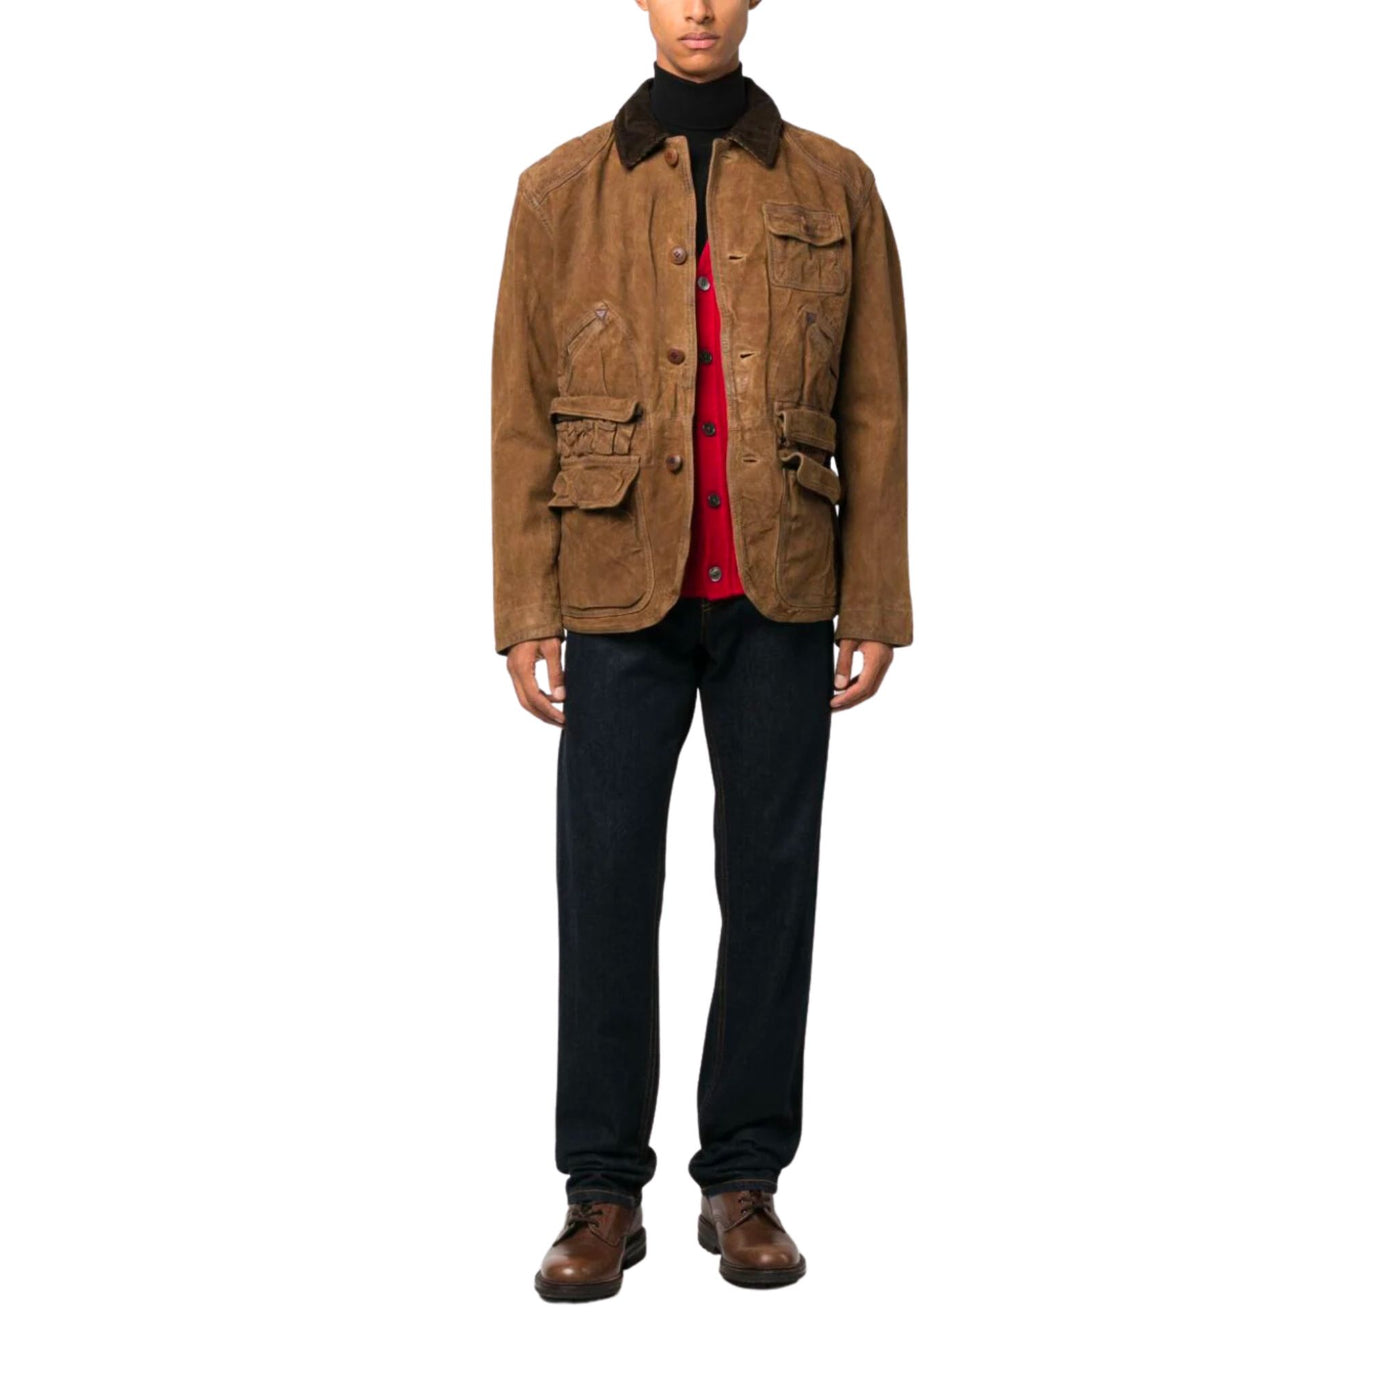 Giubbotto Uomo scamosciato marrone, Polo Ralph Lauren, indossato